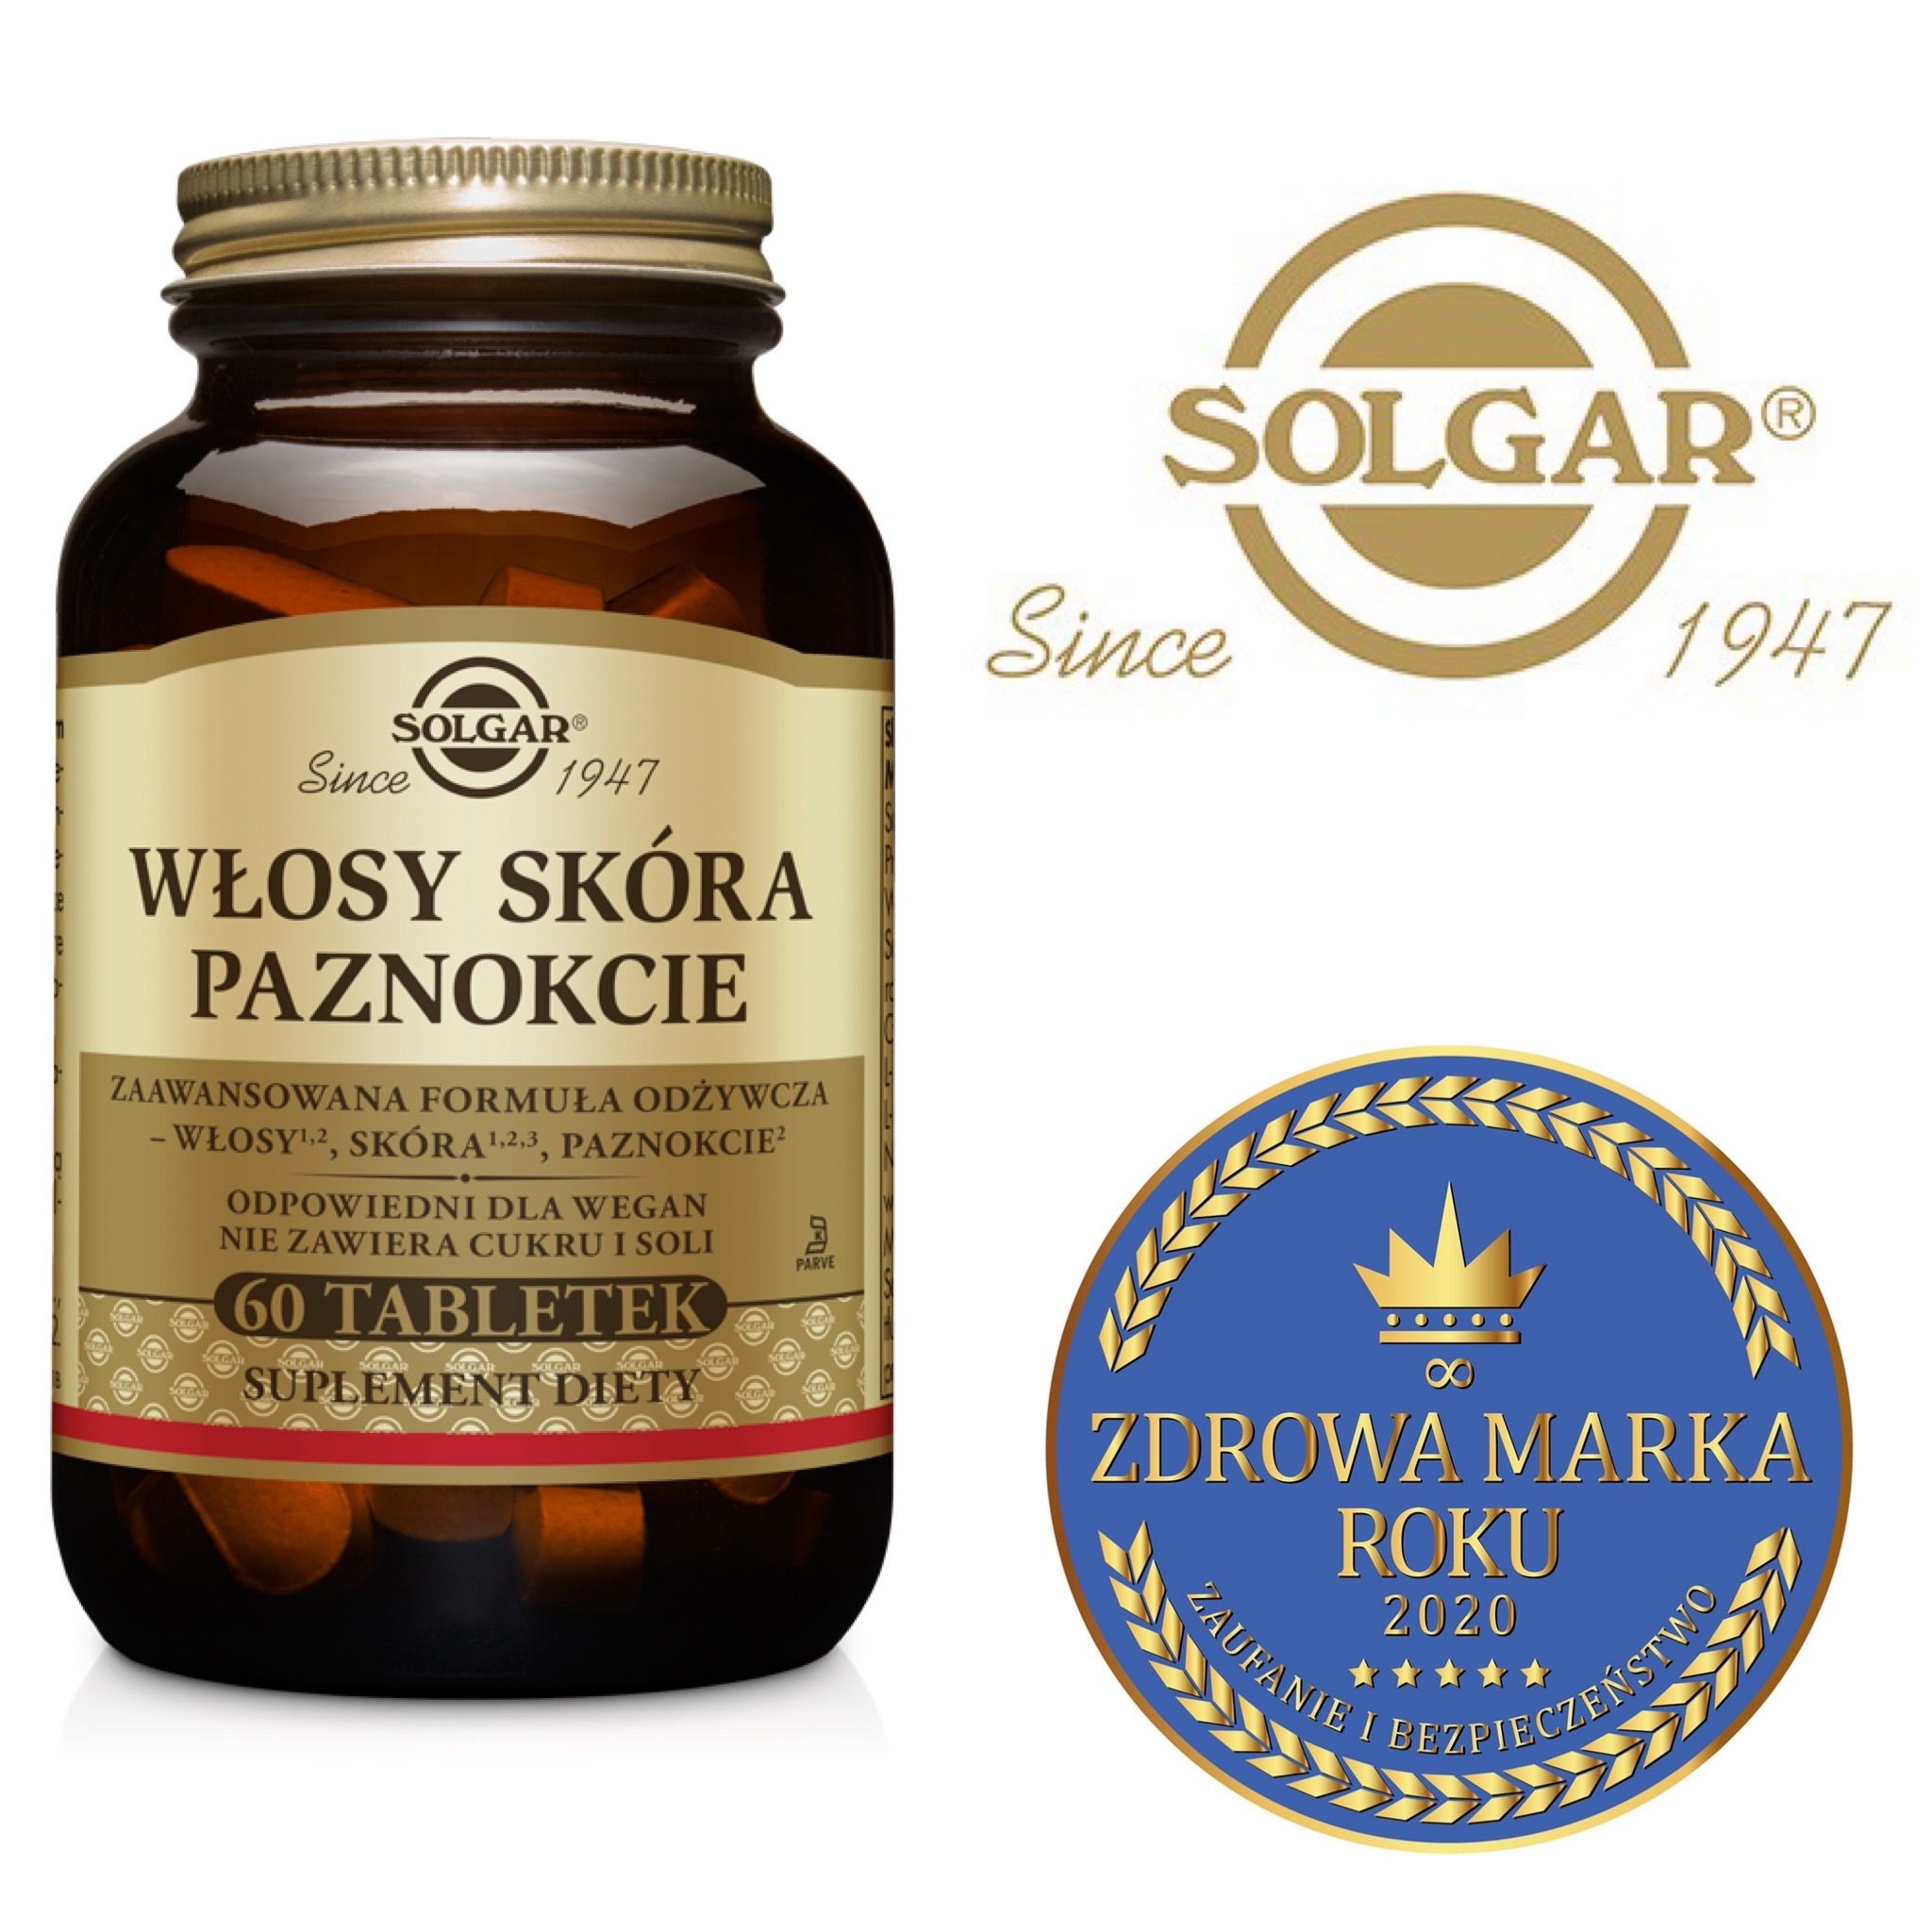 Suplementy diety prosto z natury w butelce ze złotym kapslem Solgar!